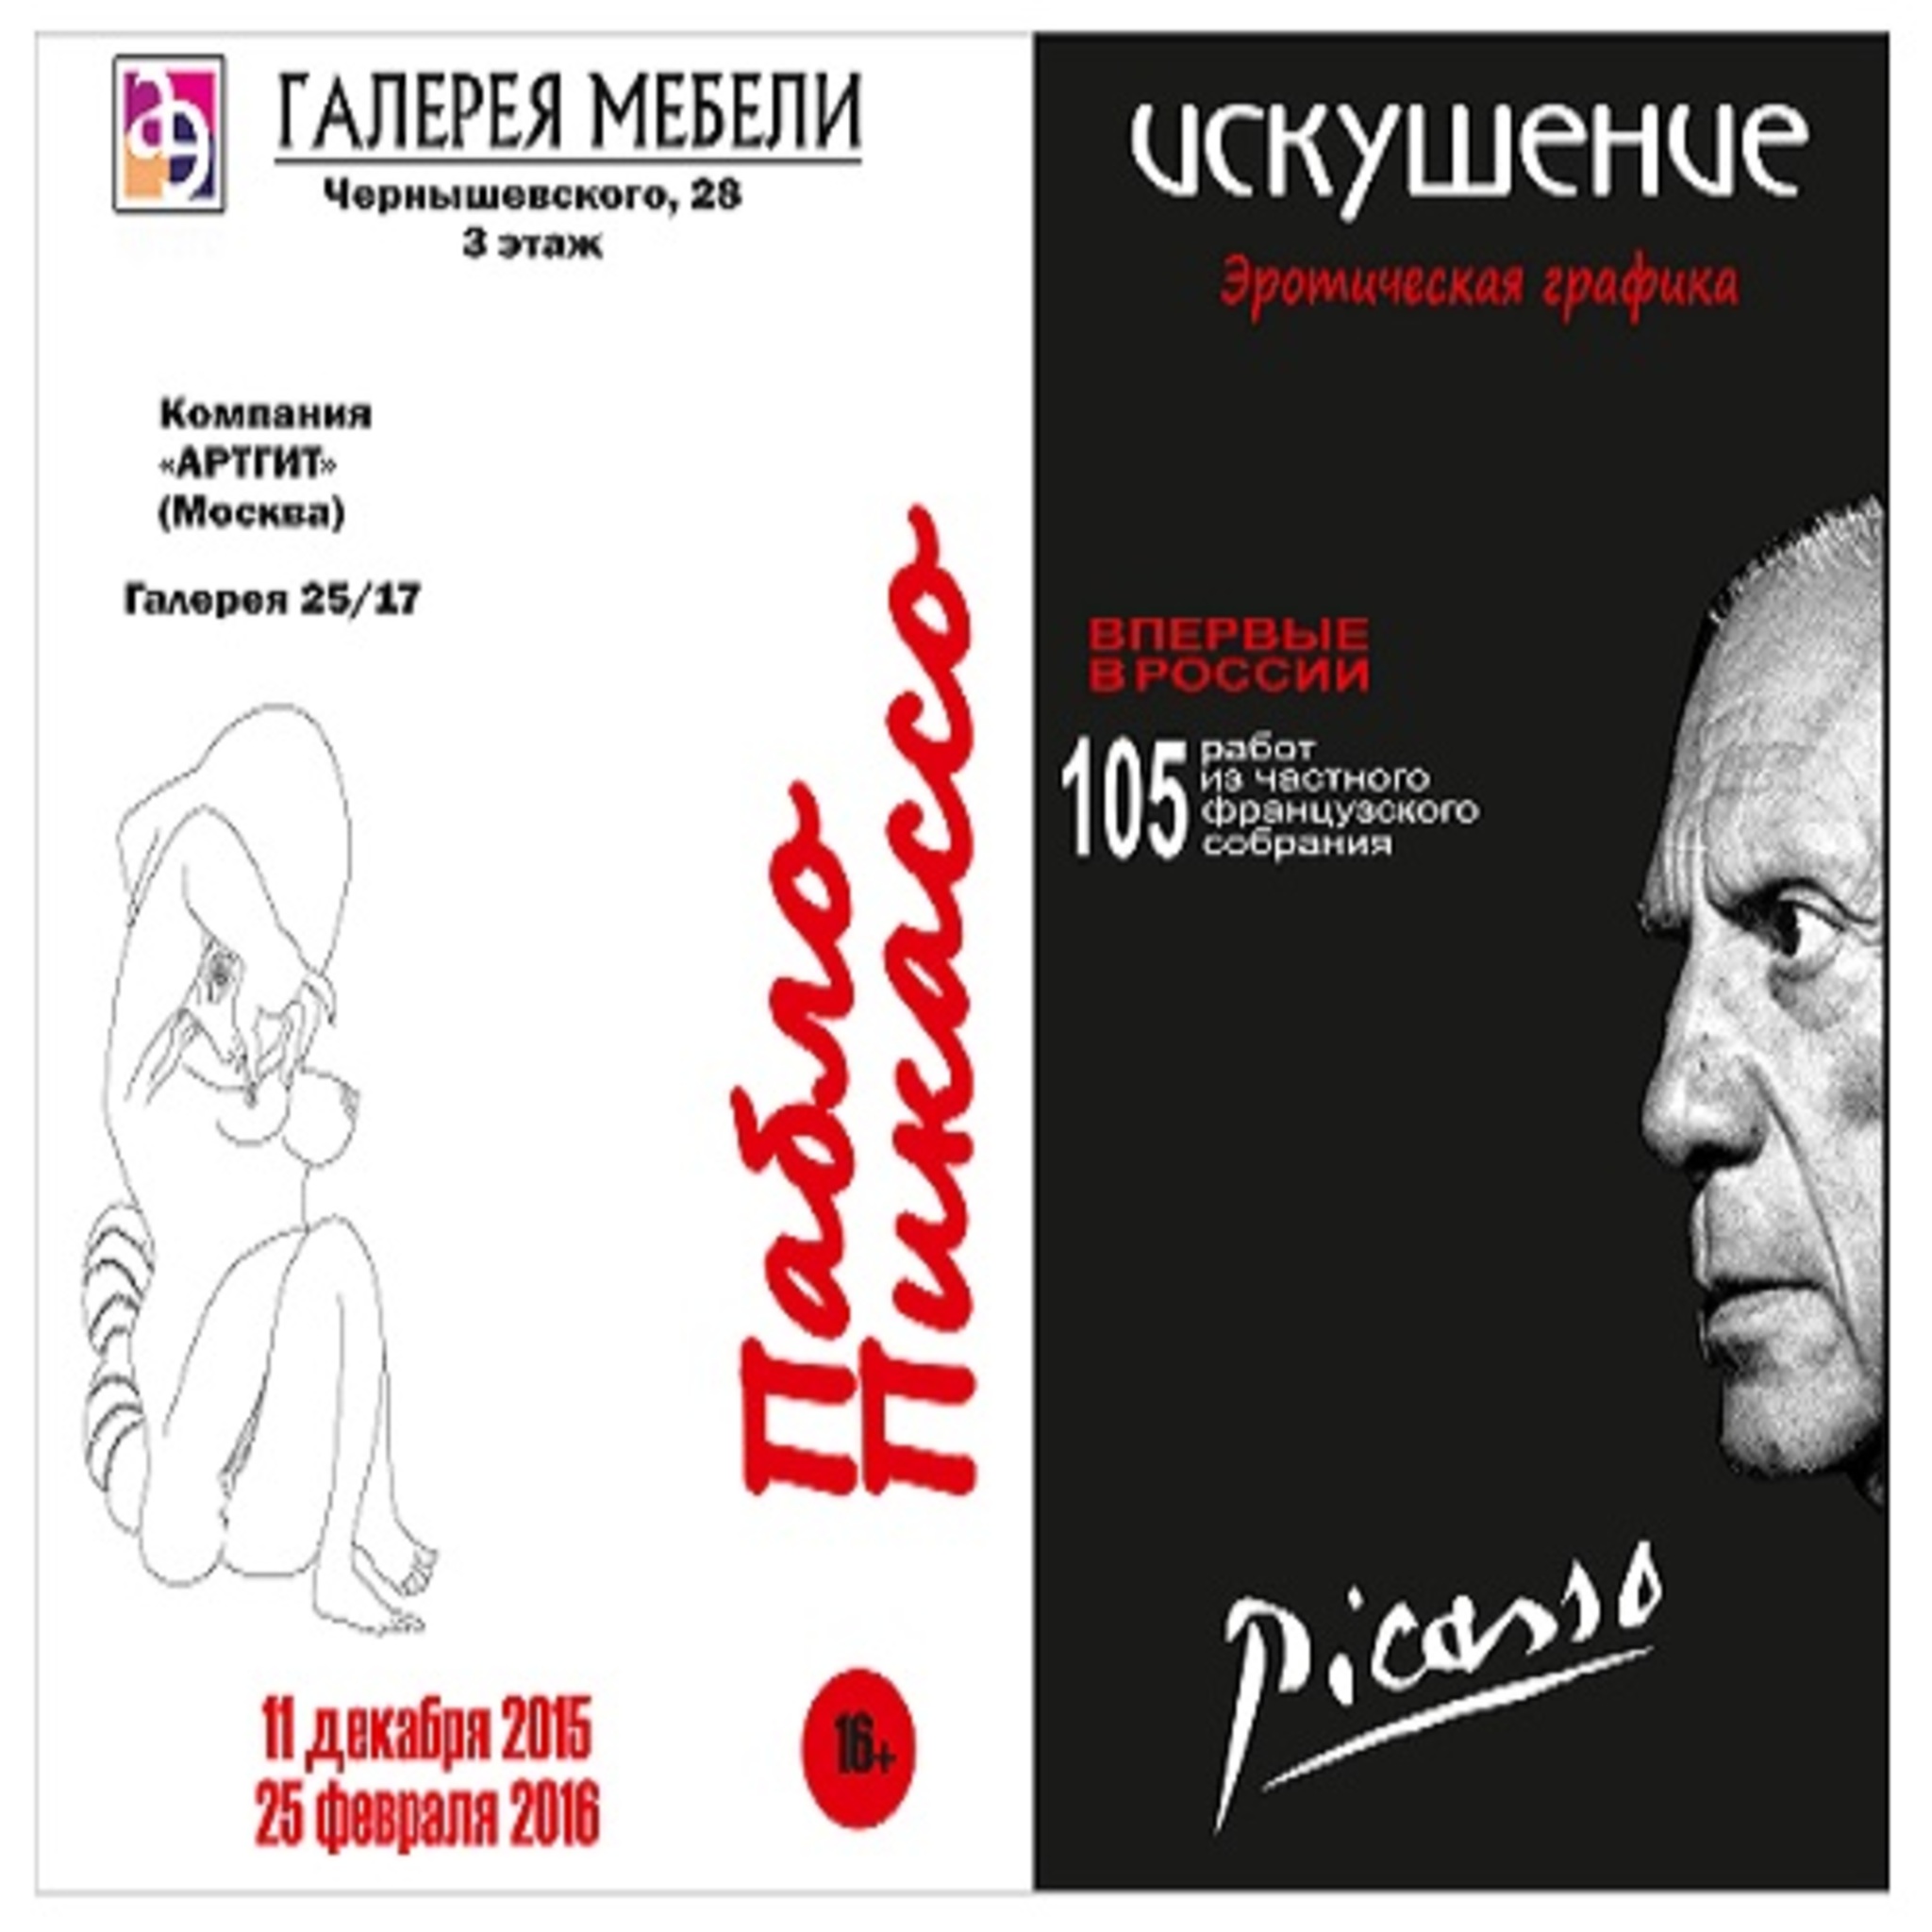 The exhibition Picasso. Temptation